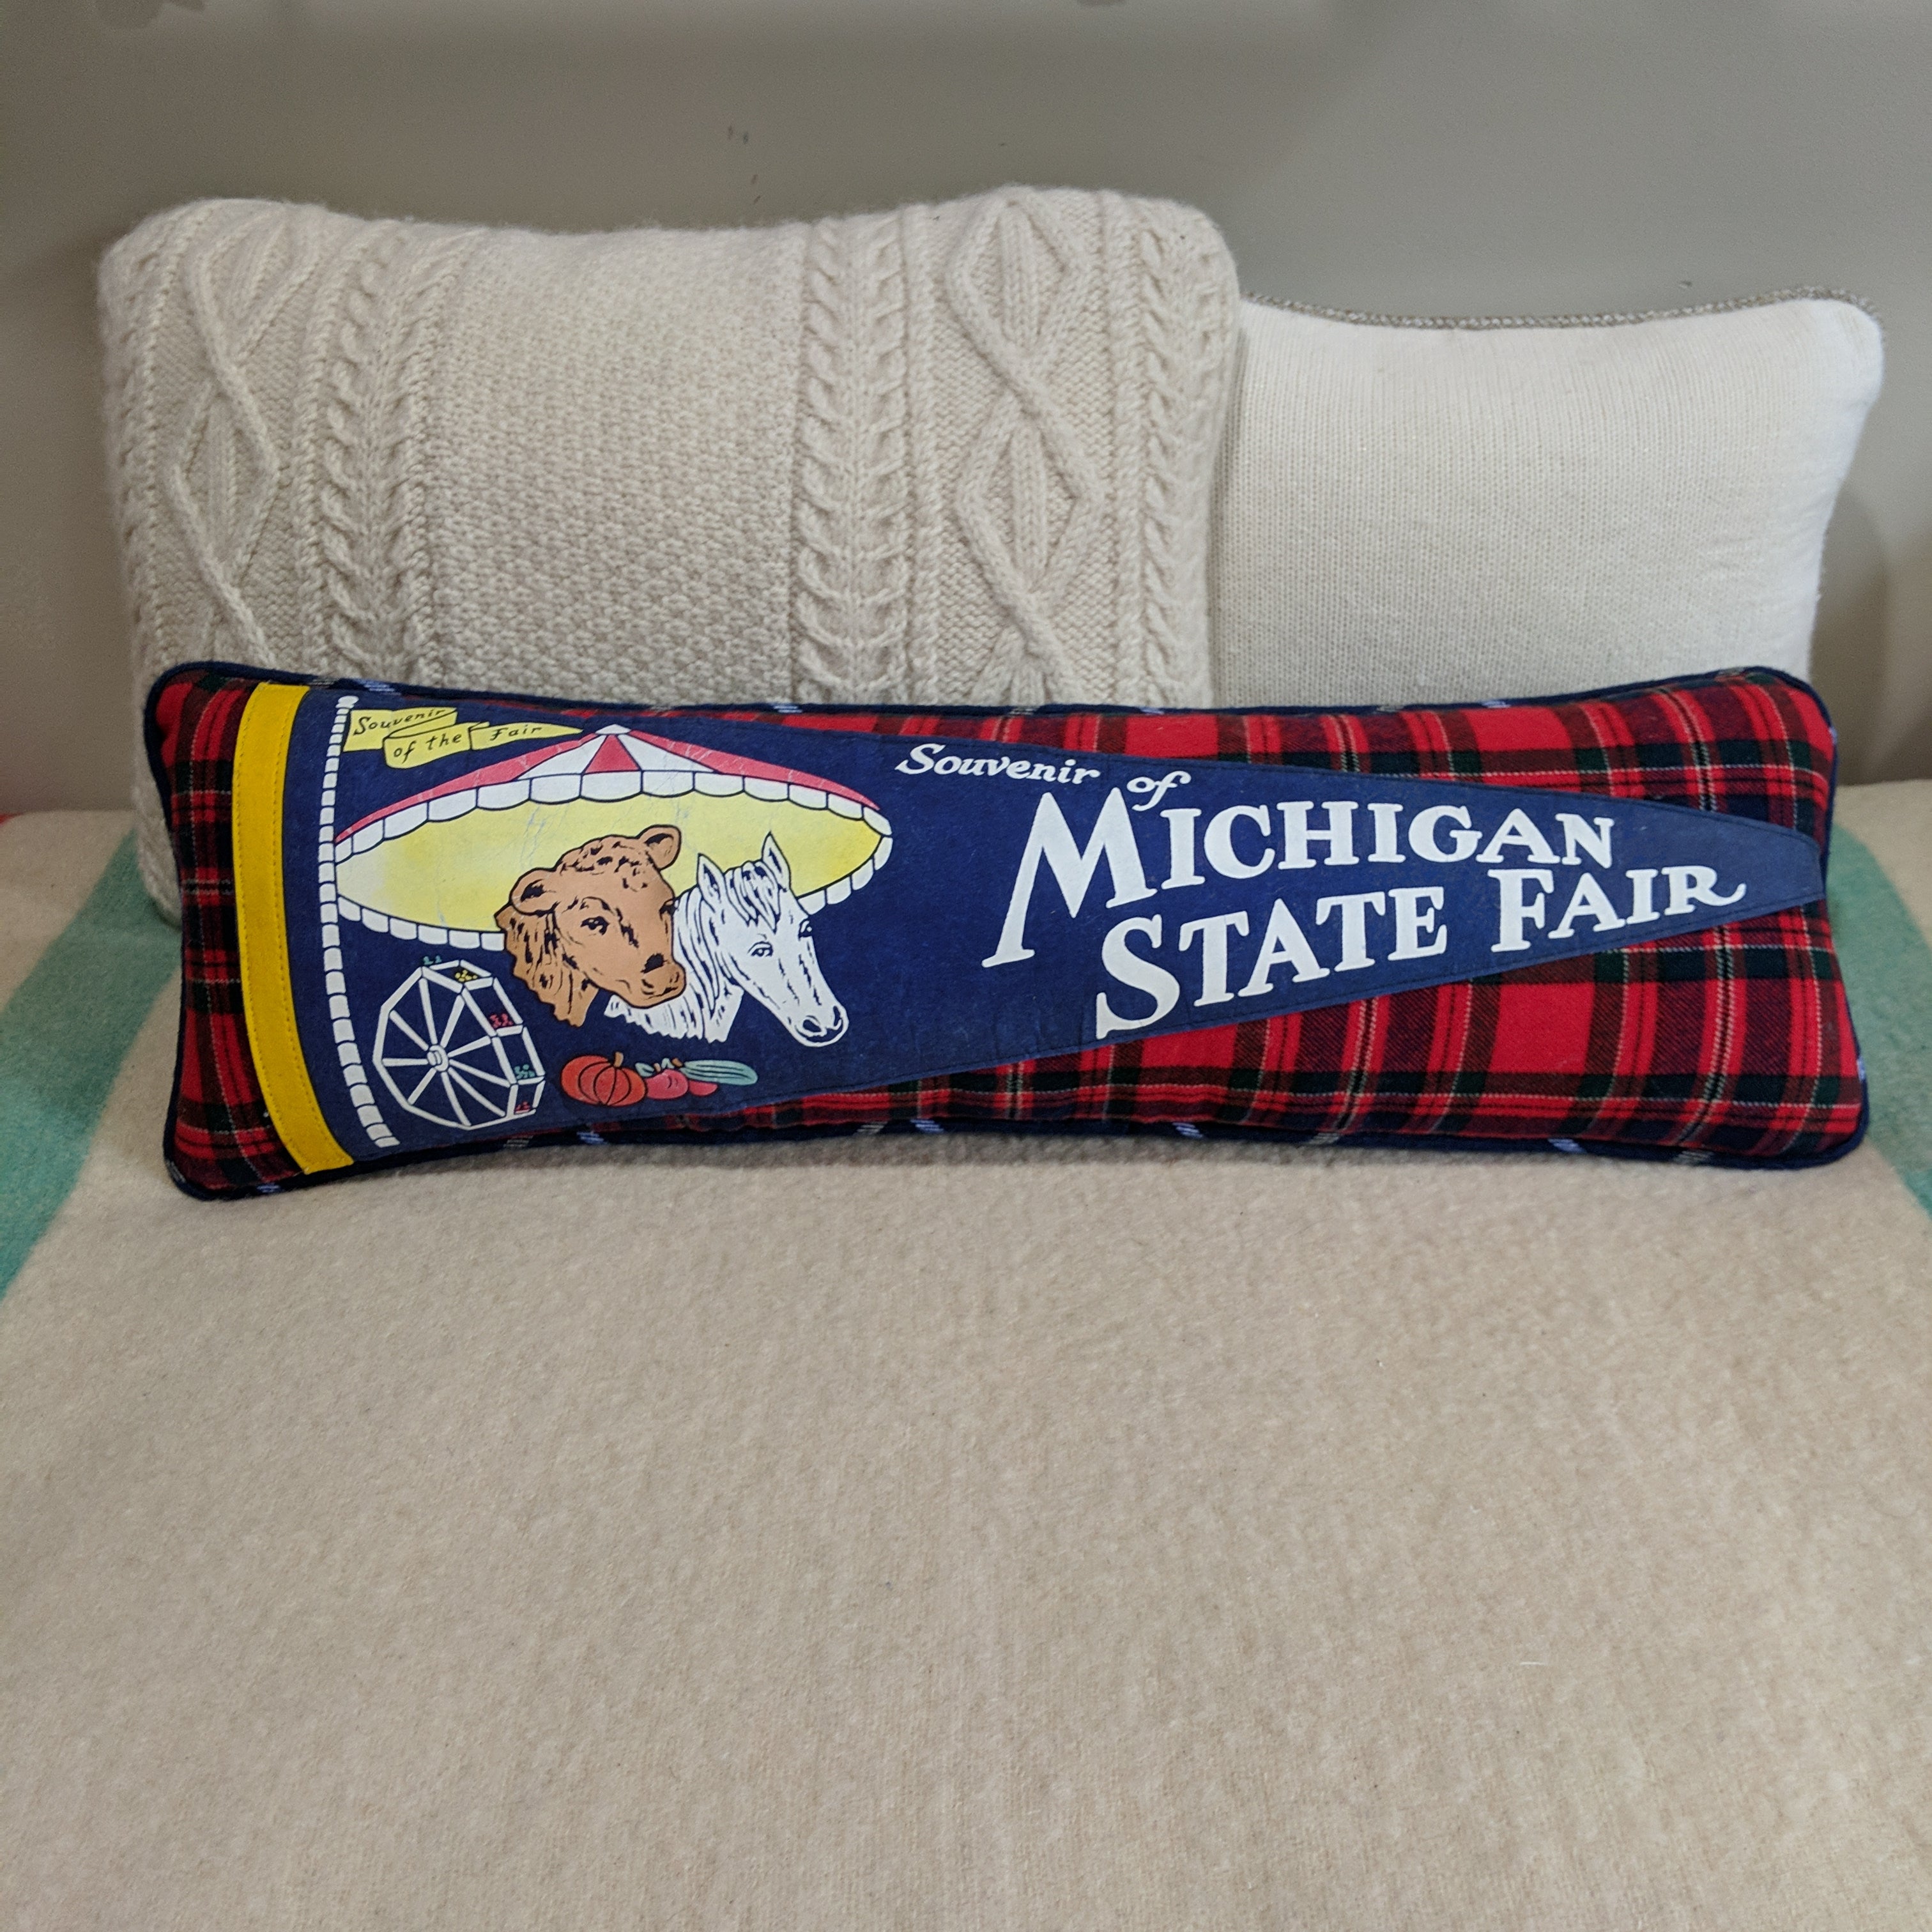 Michigan State Fair vintage pennant pillow